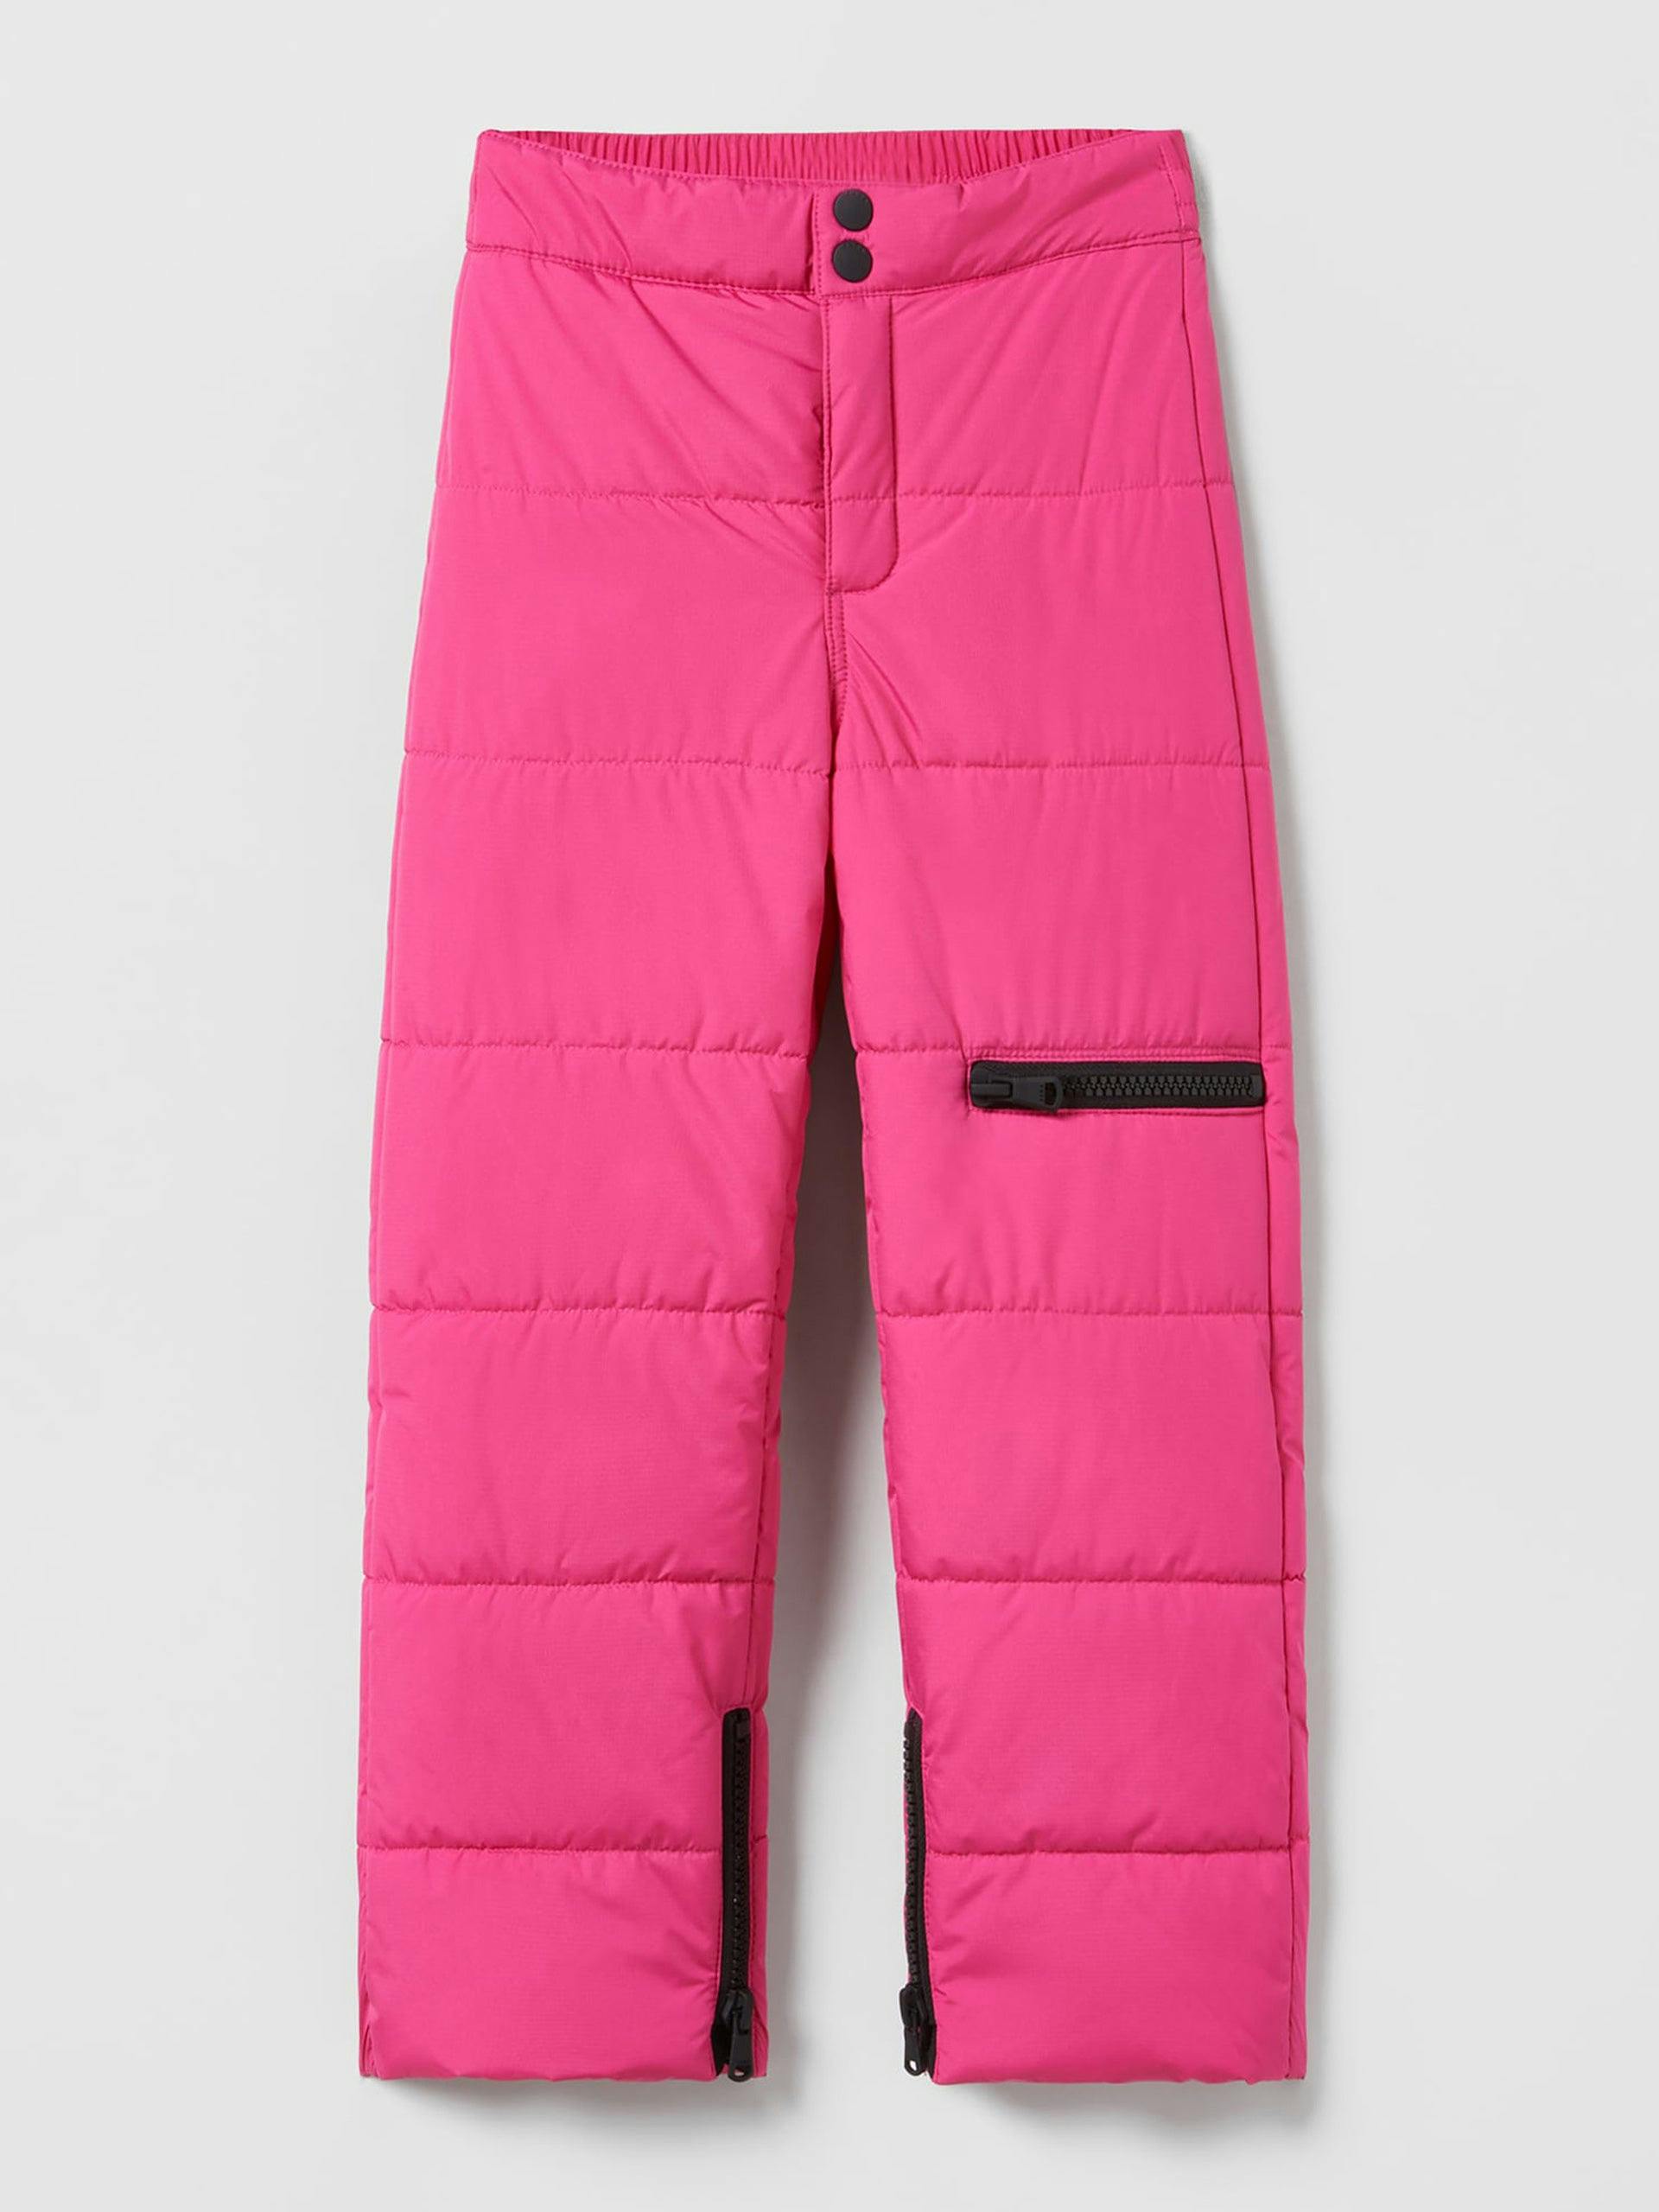 Pink ski trousers